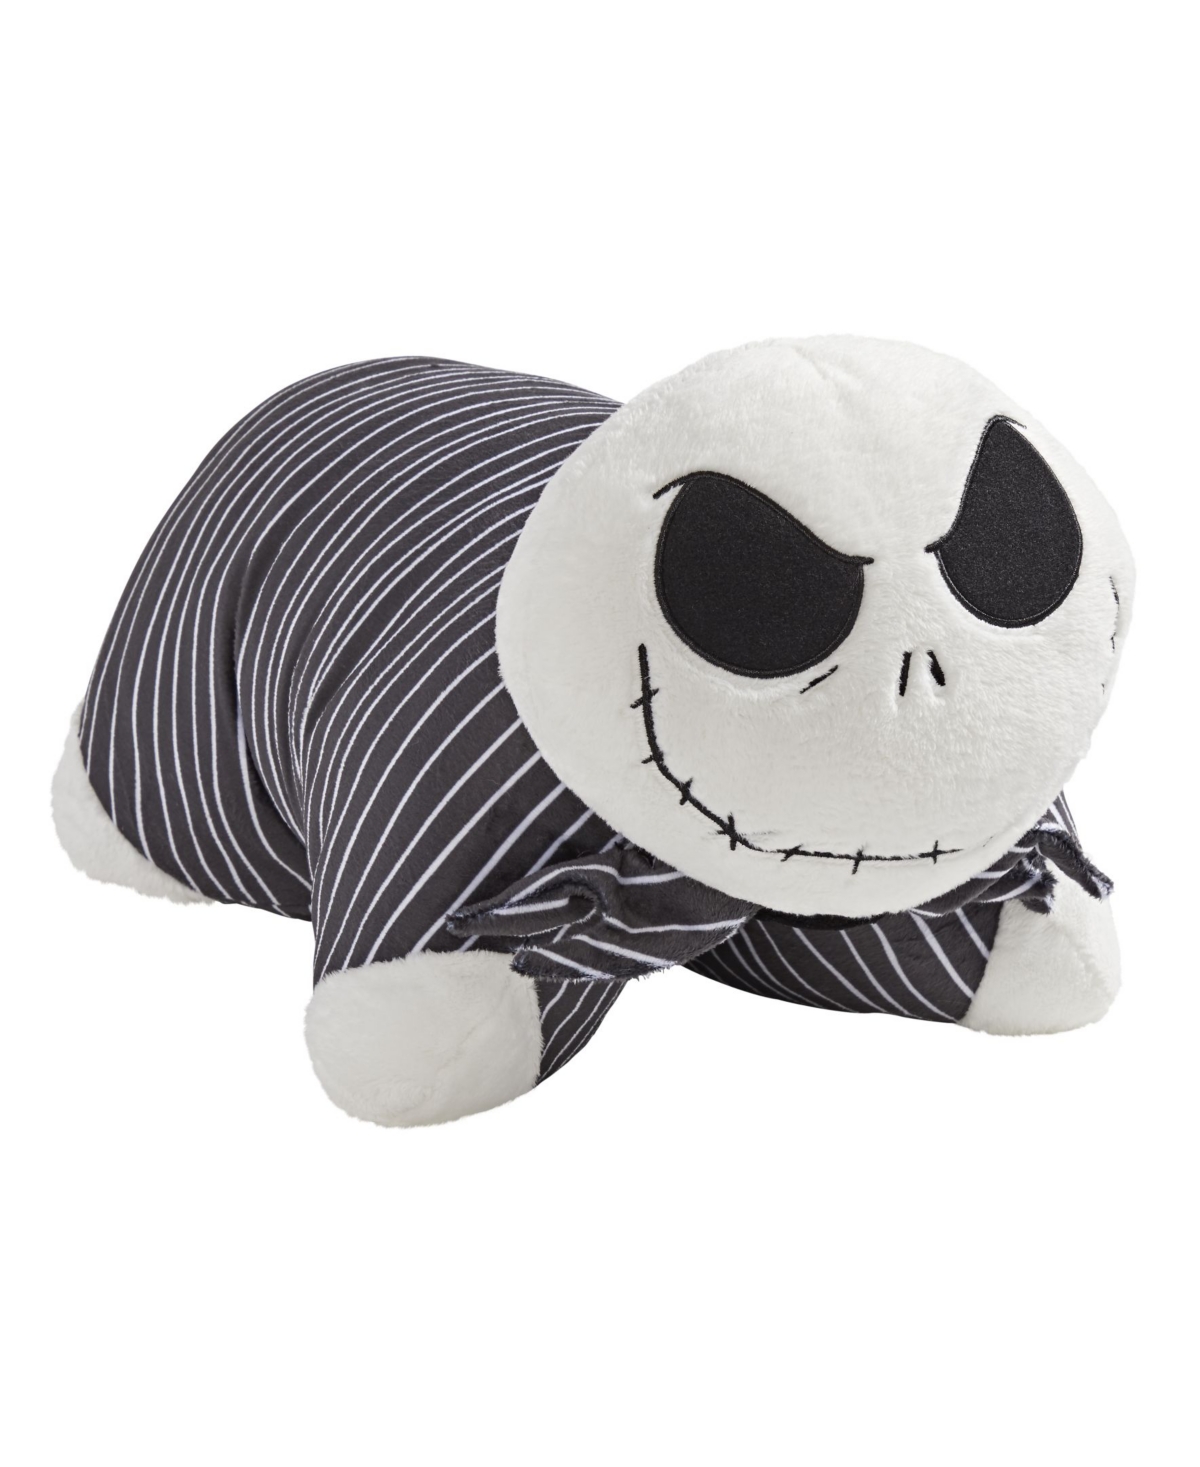 Pillow Pets Disney Nightmare Before Christmas Jack Skellington Stuffed Animal Plush Toy In Black